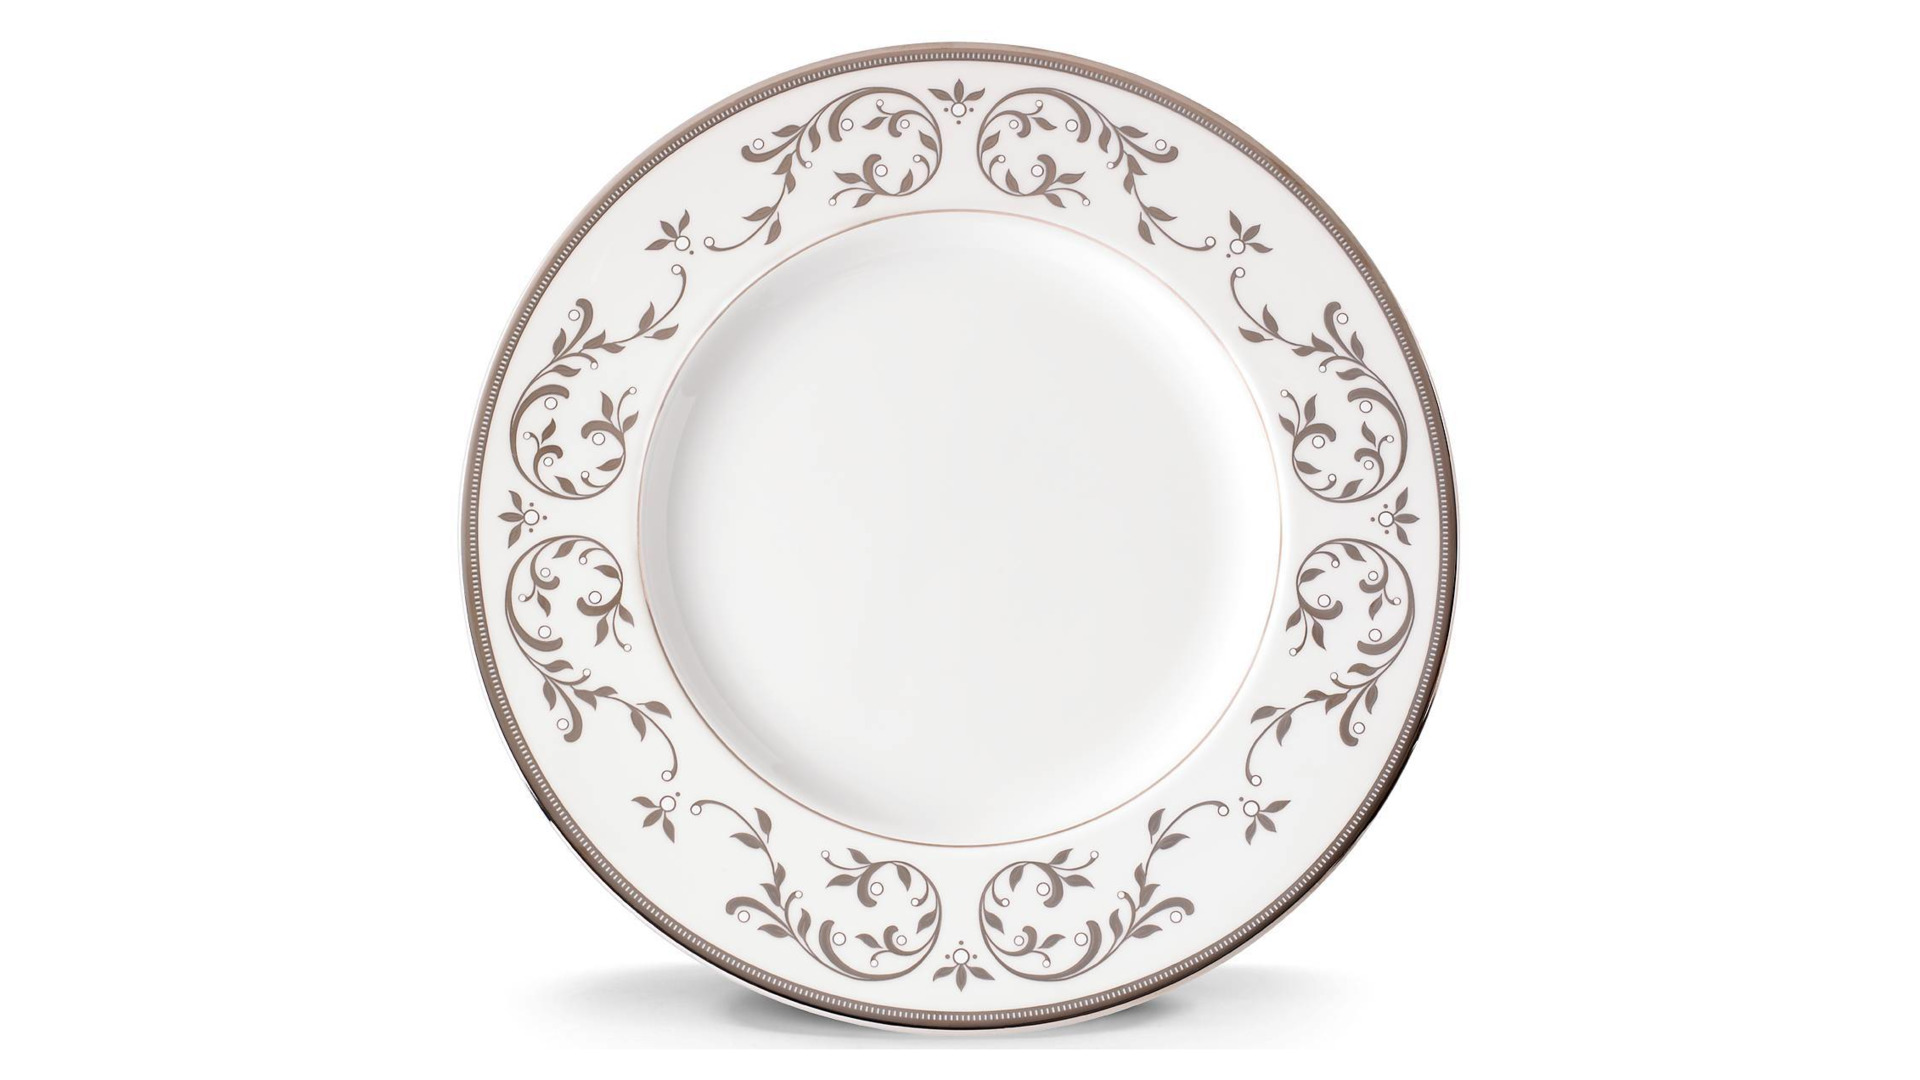 Набор тарелок обеденных Lenox Чистый опал, платина 27 см, фарфор. 6 шт